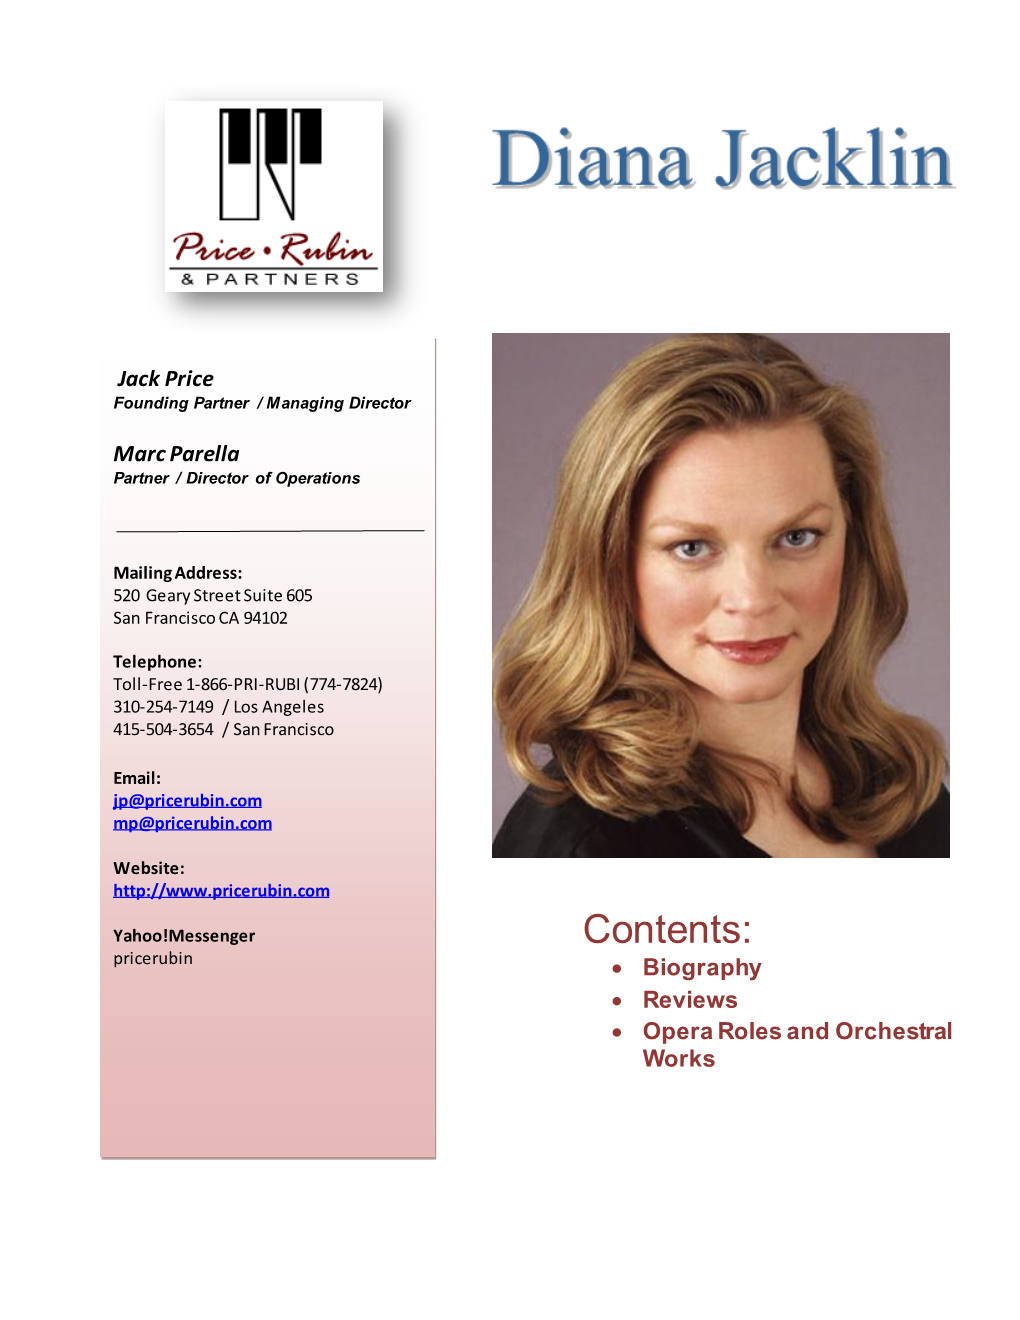 Diana Jacklin- BIOGRAPHY